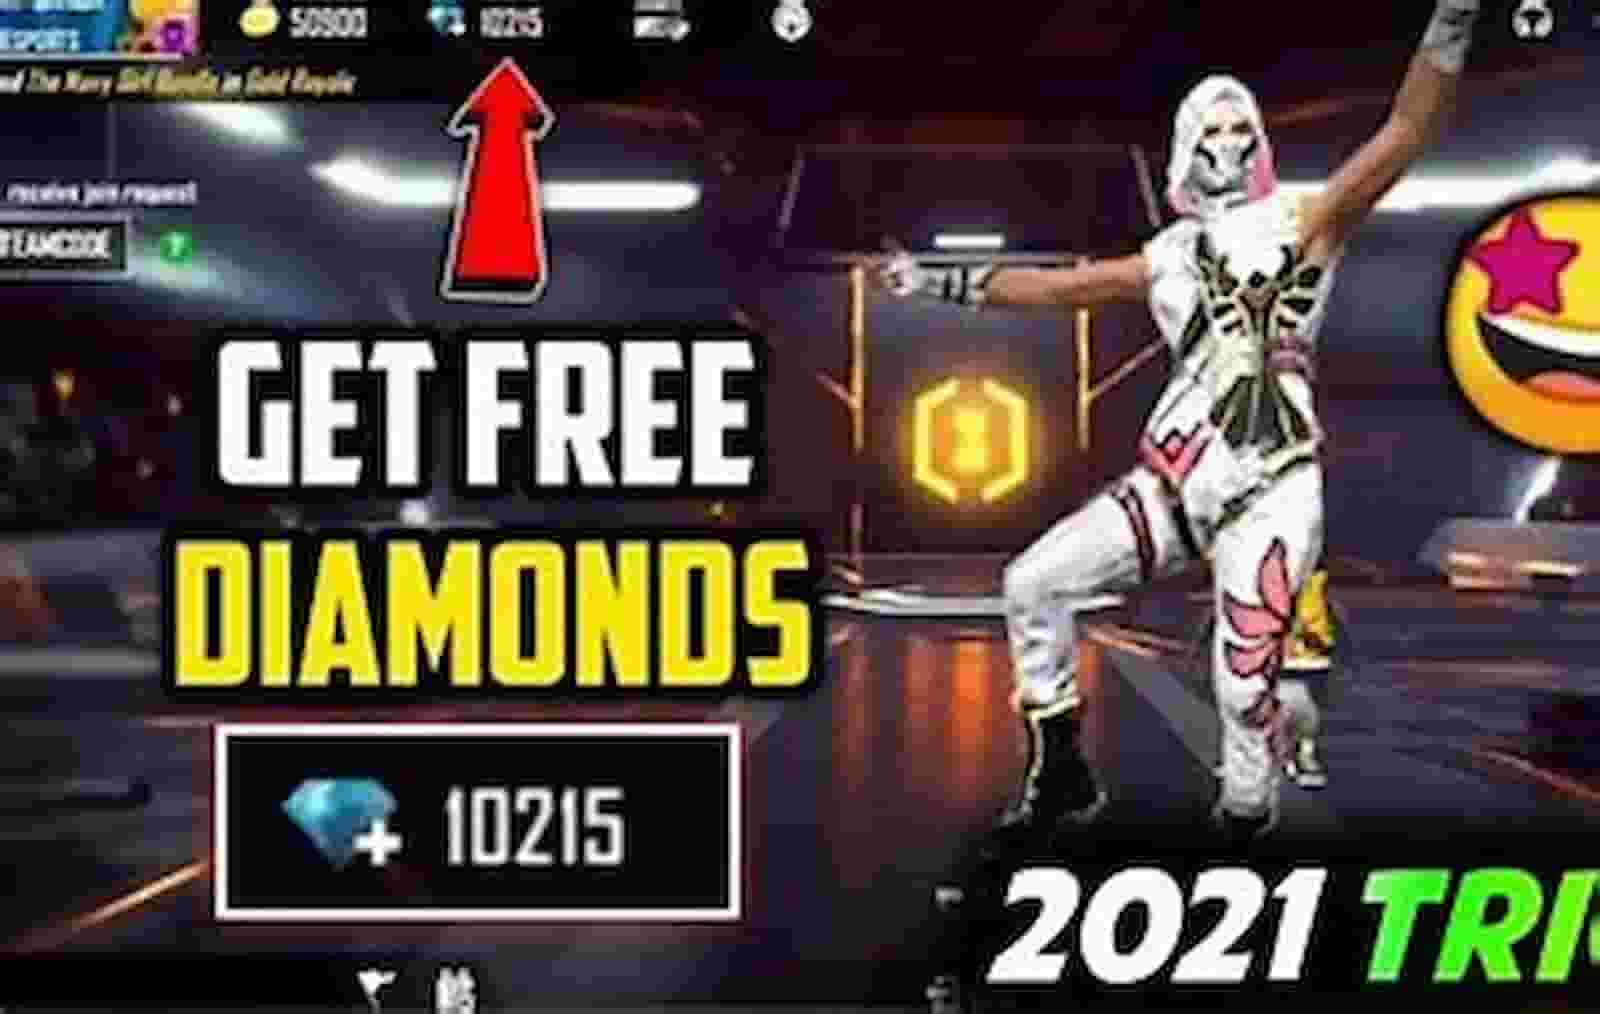 3 Best Apps To Buy Free Fire Diamonds